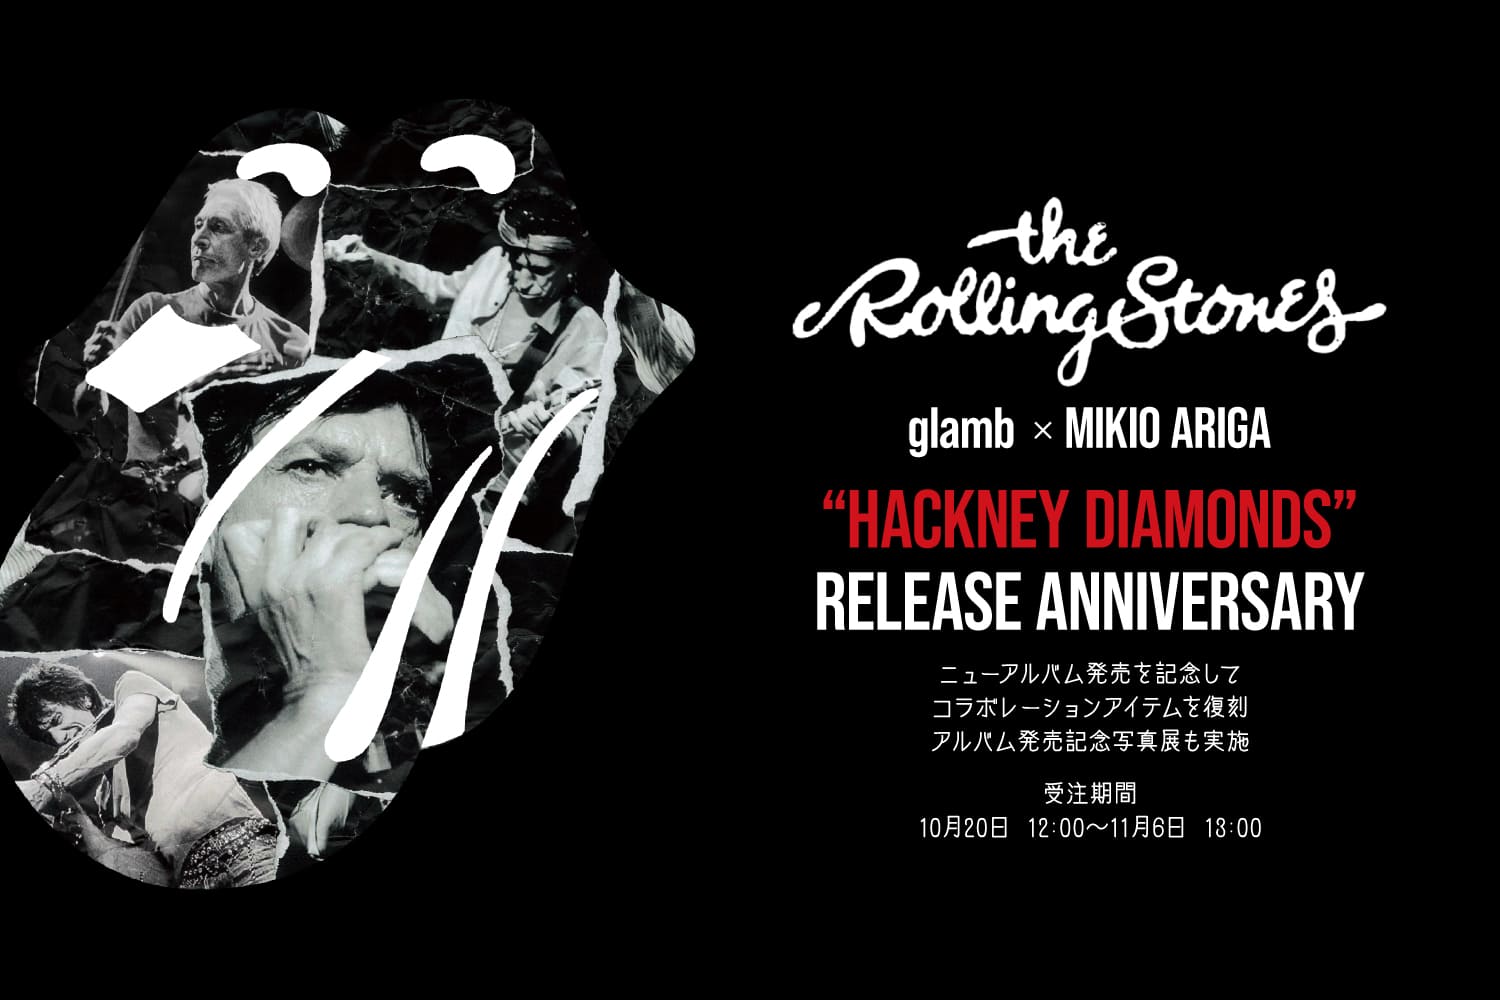 the RollingStones glamb × MIKIO ARIGA “HACKNEY DIAMONDS” RELEASE ANNIVERSARY